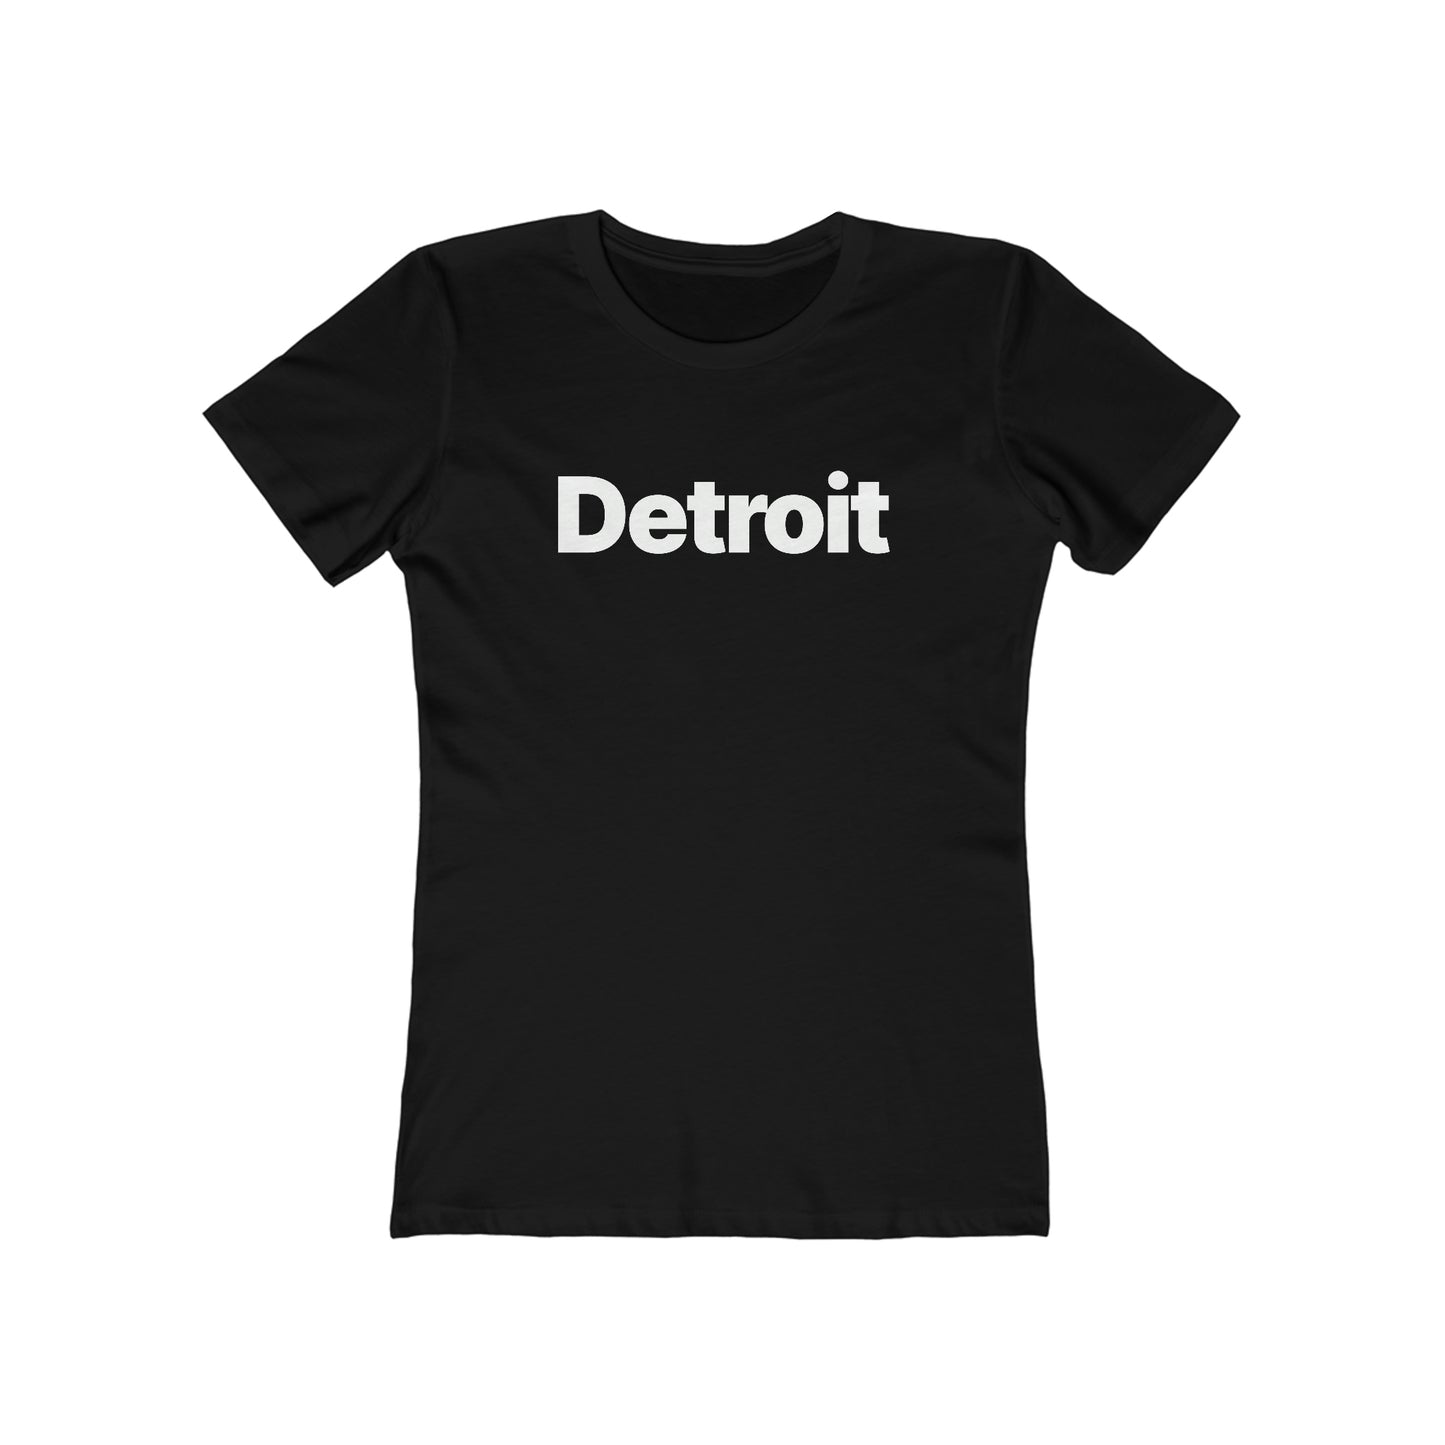 'Detroit' T-Shirt (Small SUV Brand Font) | Women's Boyfriend Cut